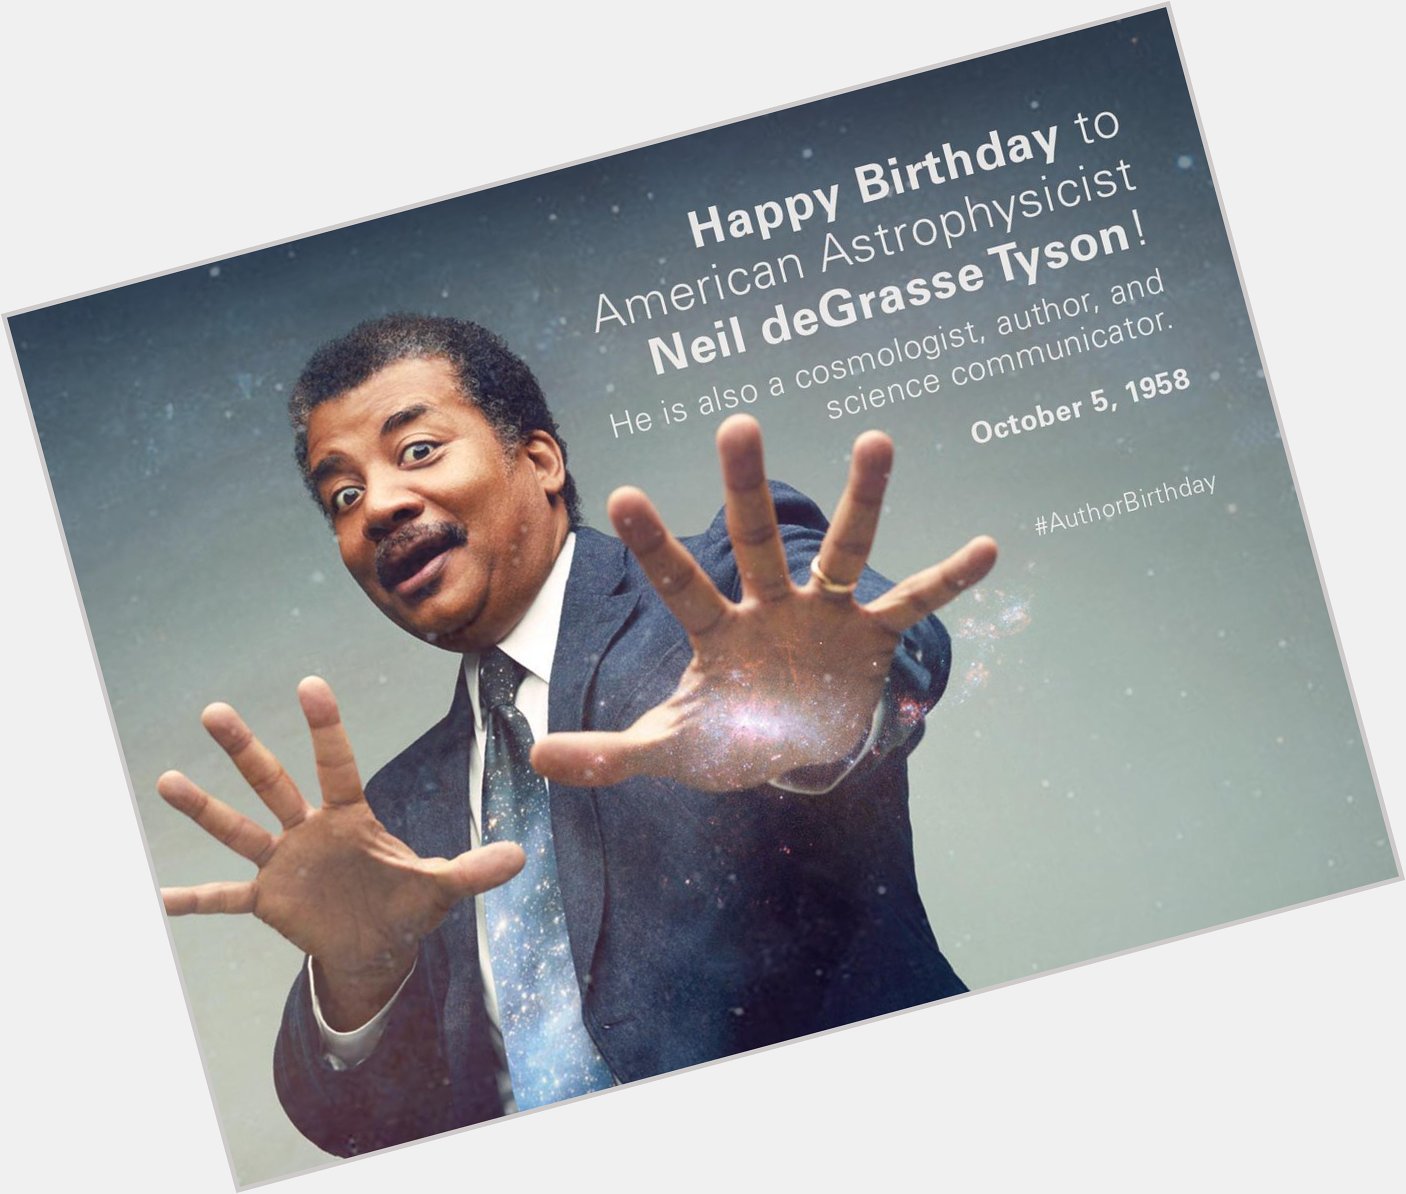 Happy birthday to award-winning astrophysicist and author, Neil deGrasse Tyson! 